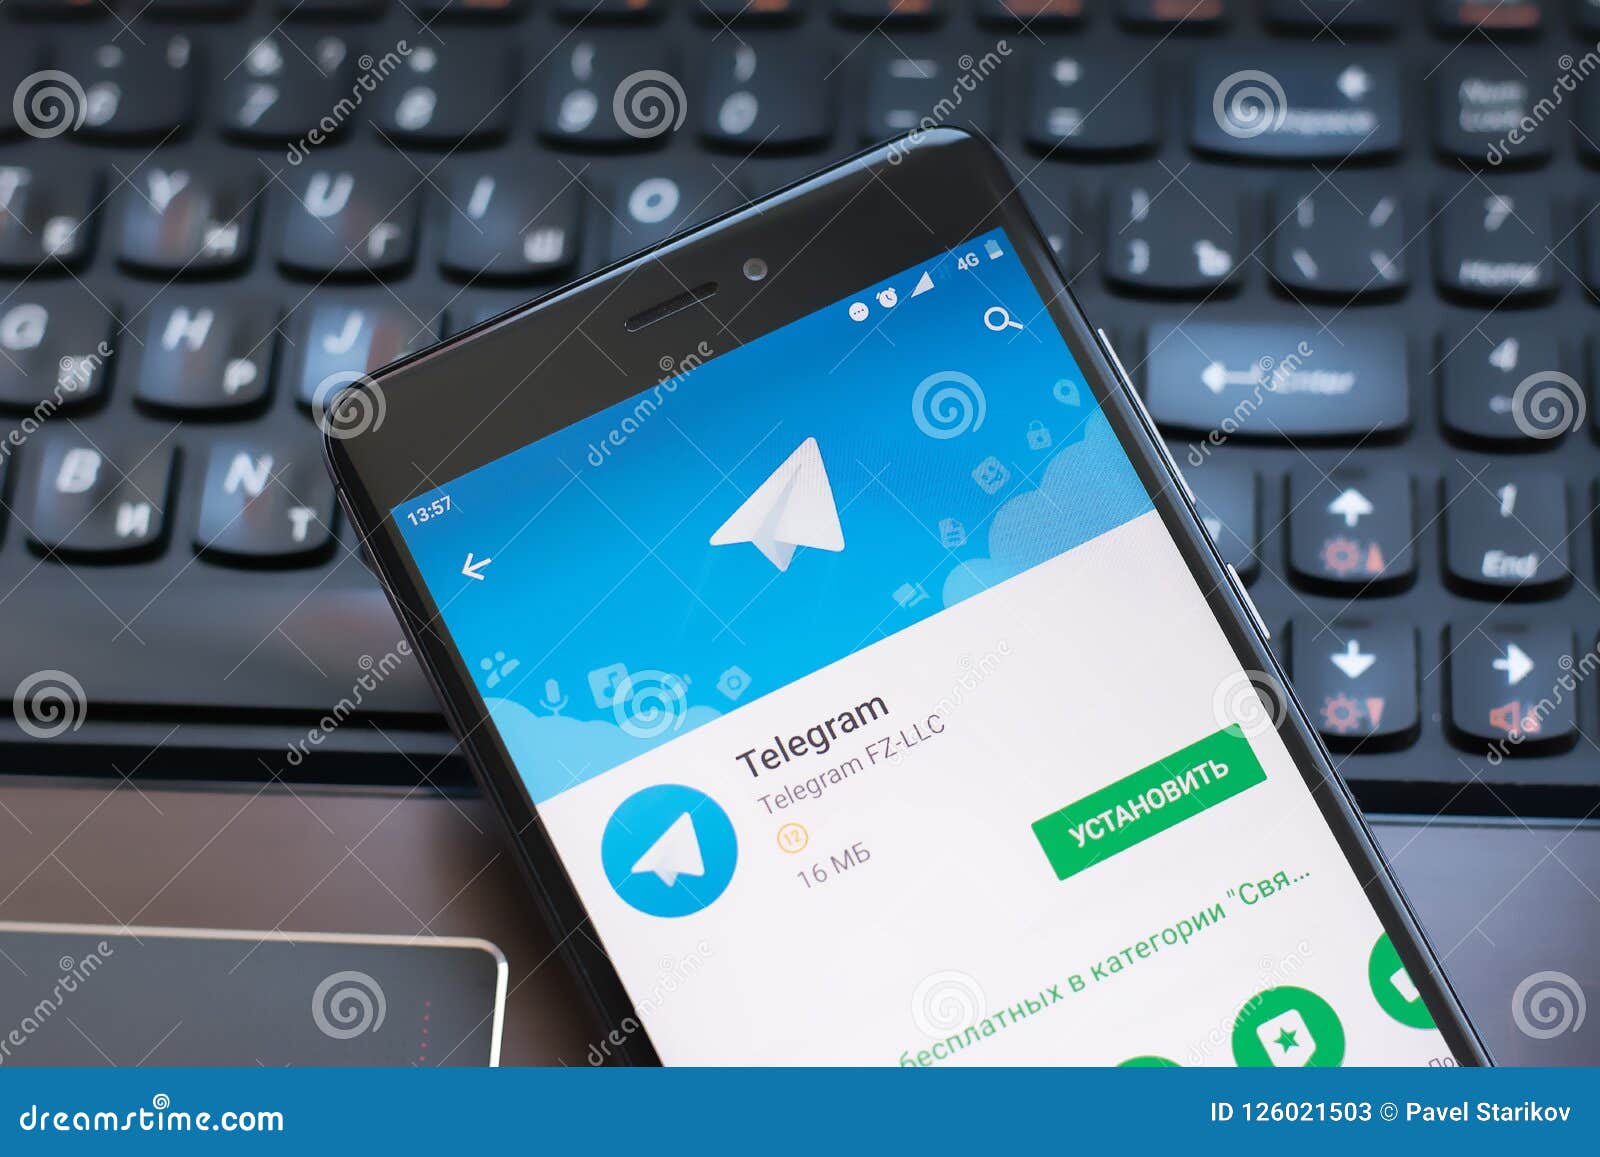 Telegram google sheets. Телеграм Google Play. Telegram ЗДФНЬФКЛУЕ. SENDPHOTO Telegram API. Press install Telegram app picture.